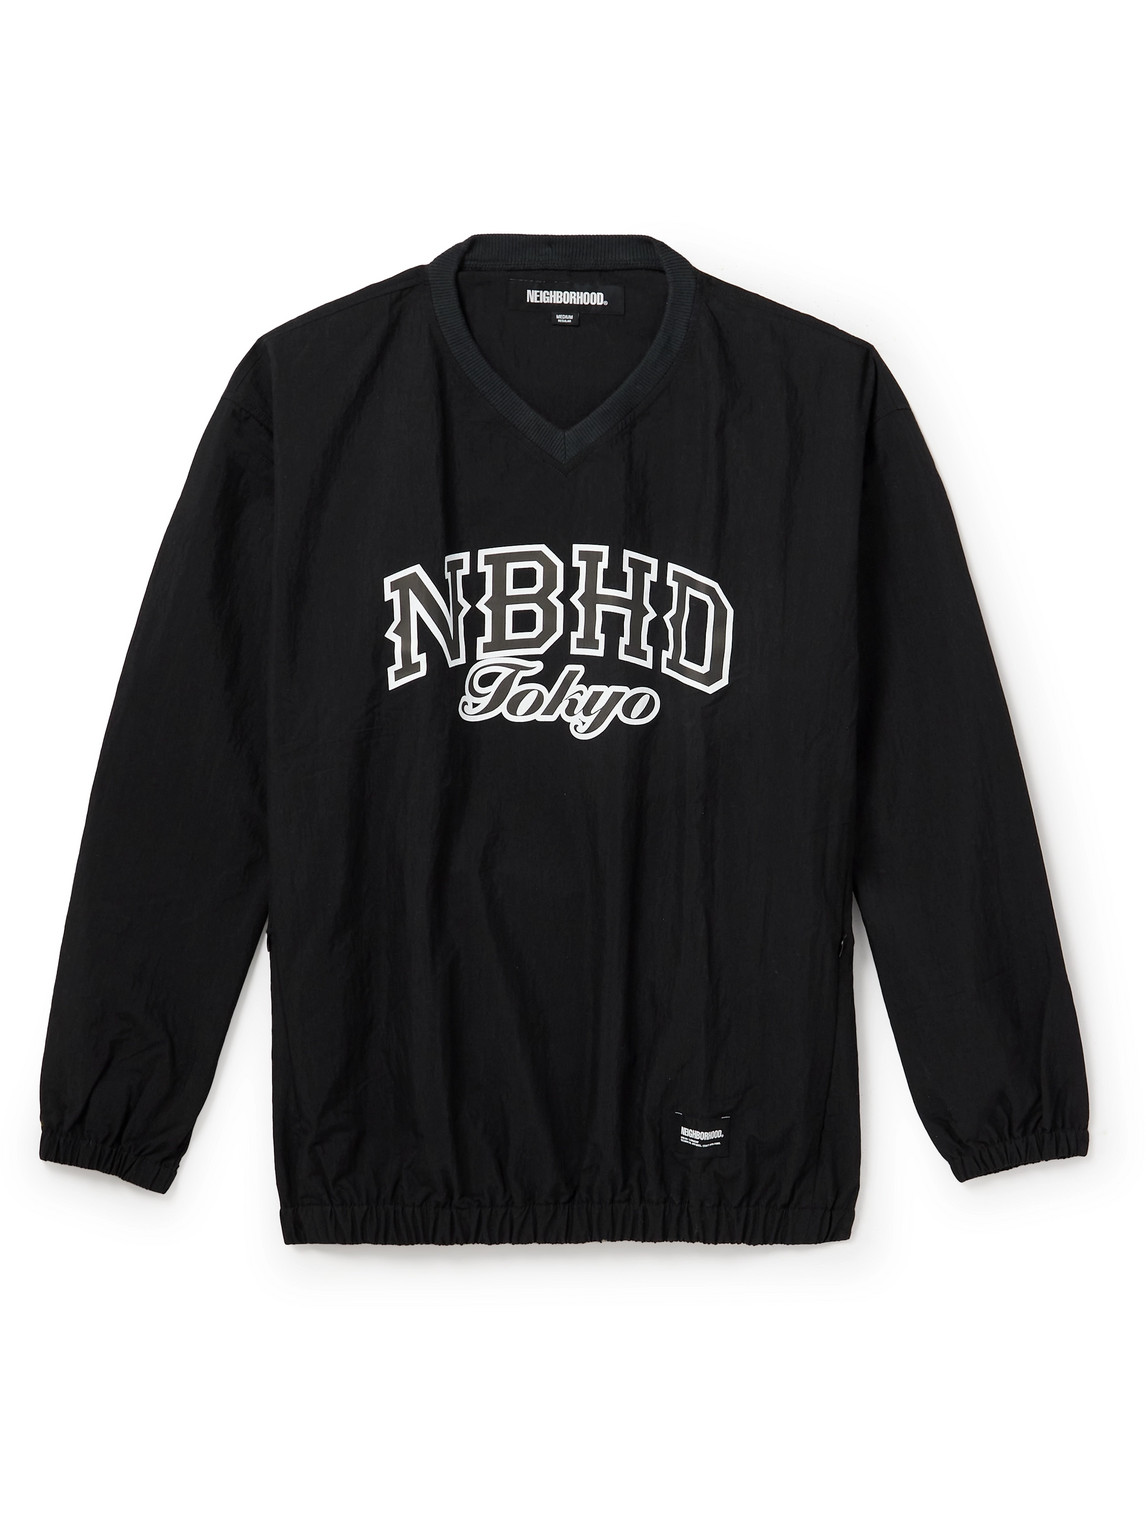 Neighborhood - Logo-Print SHELTECH Sweatshirt - Men - Black - L von Neighborhood